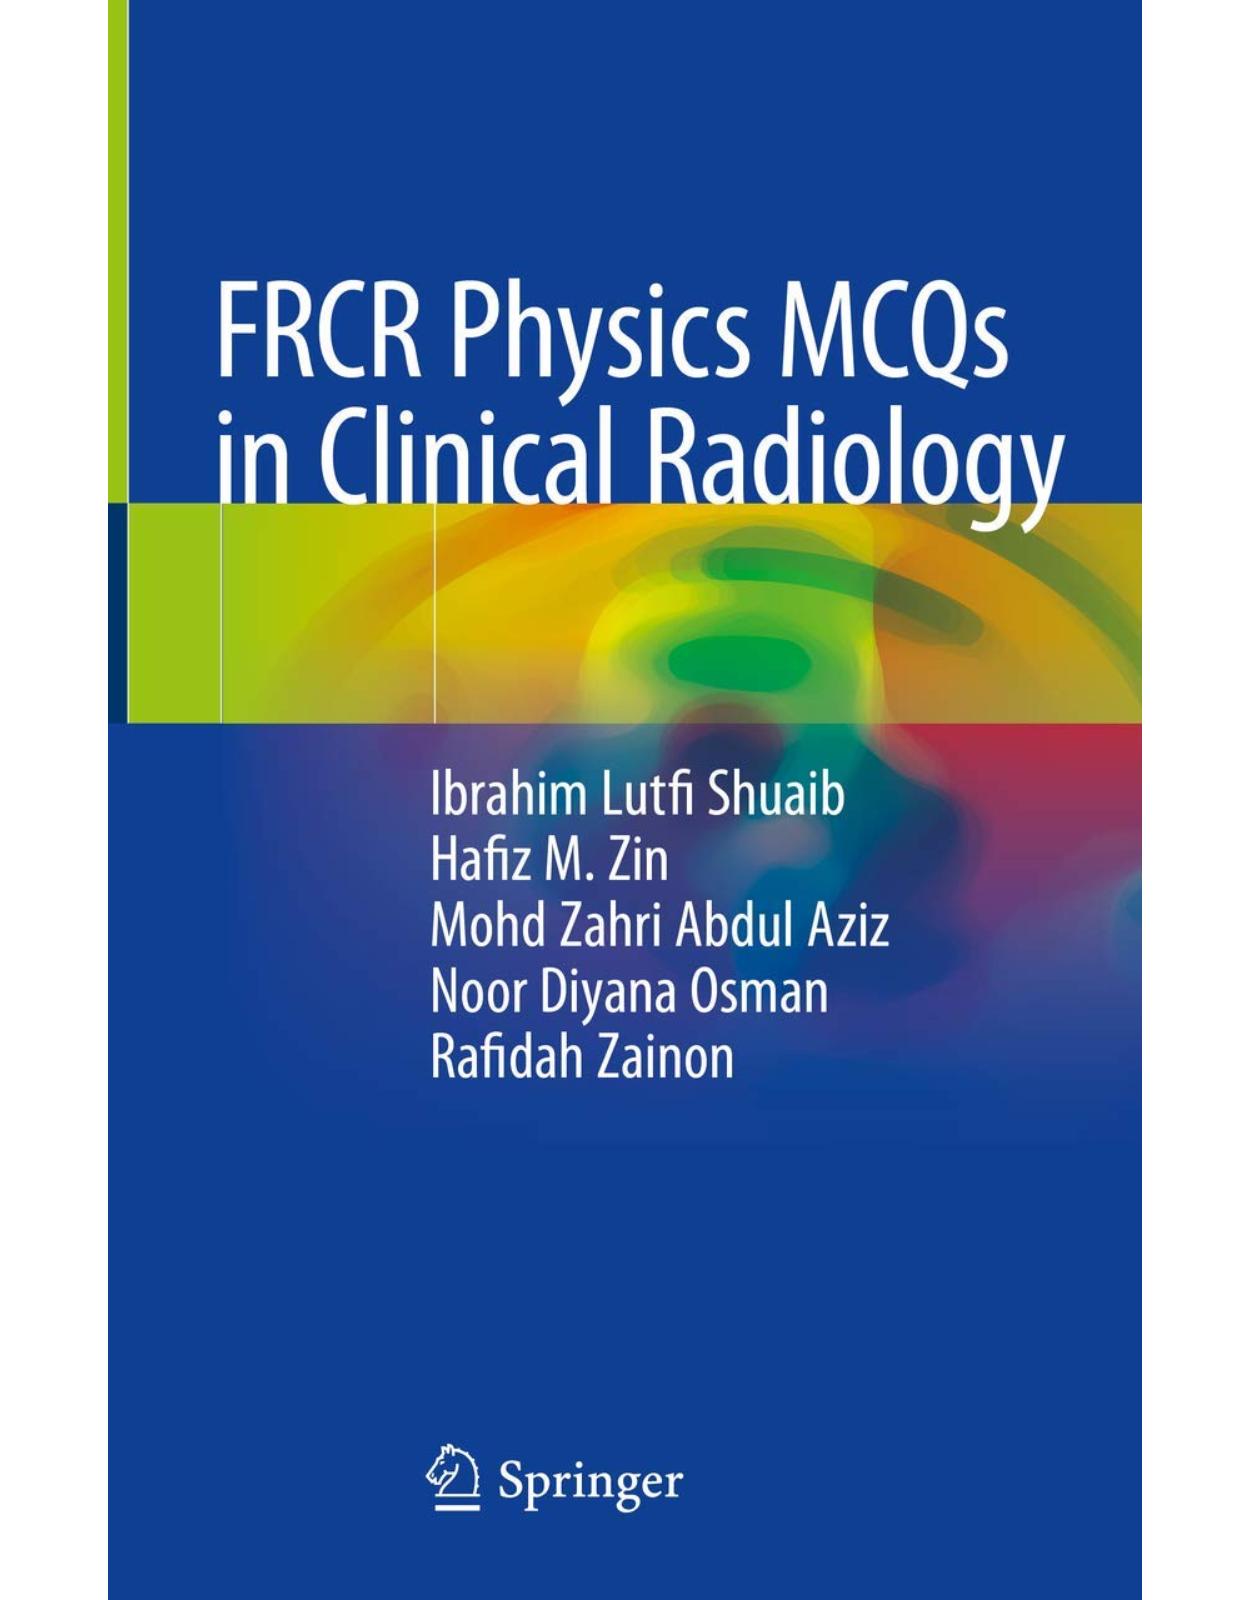 FRCR Physics MCQs in Clinical Radiology